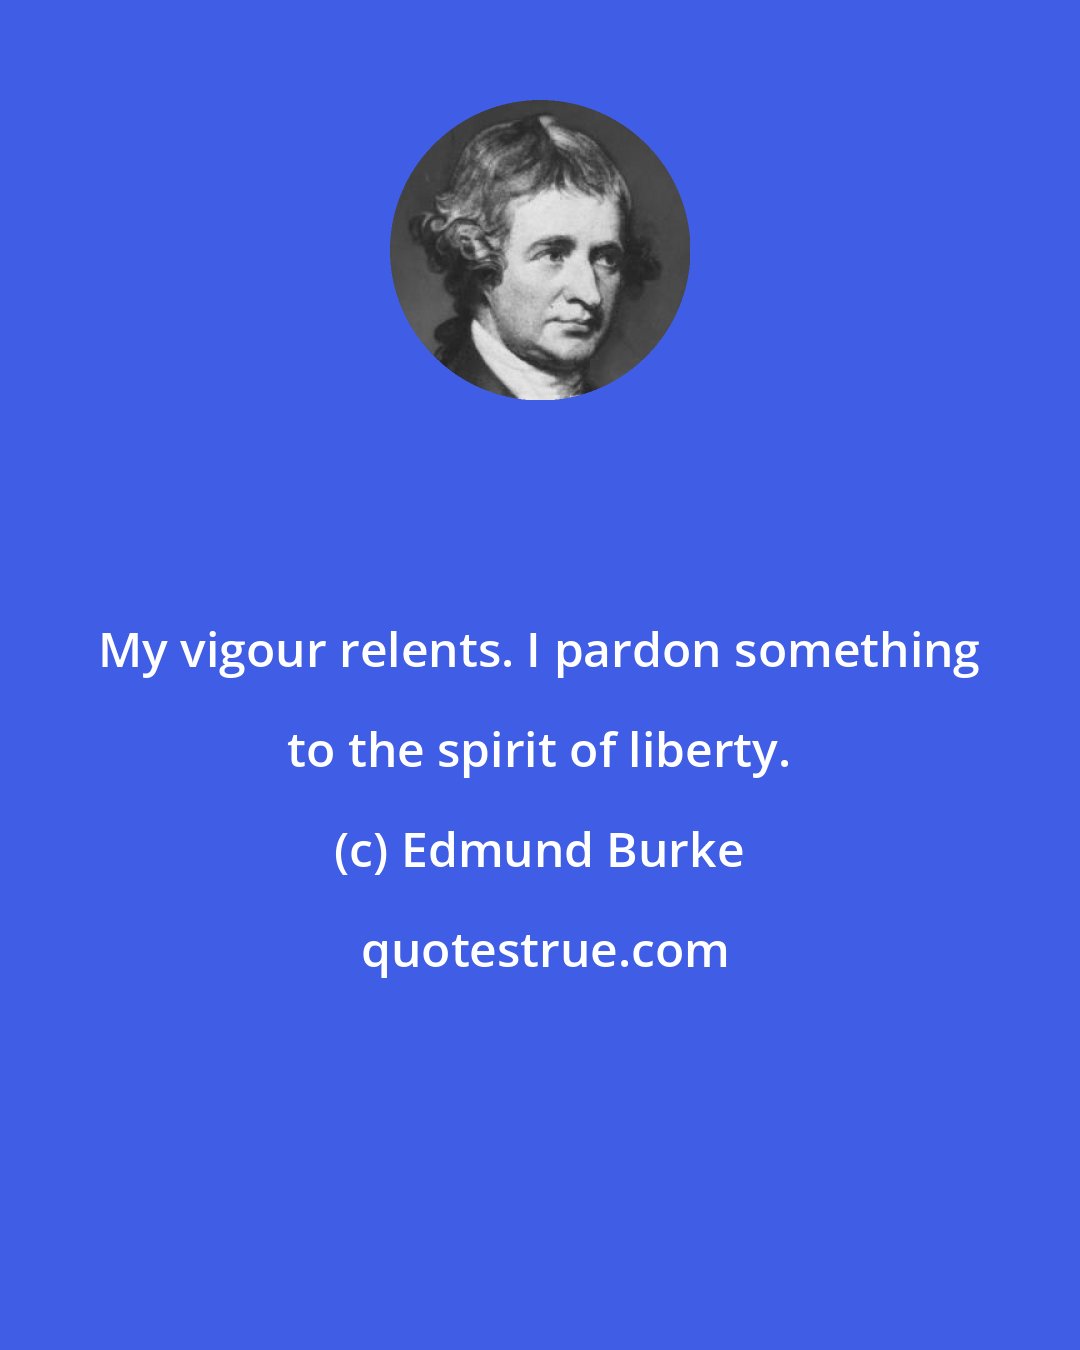 Edmund Burke: My vigour relents. I pardon something to the spirit of liberty.